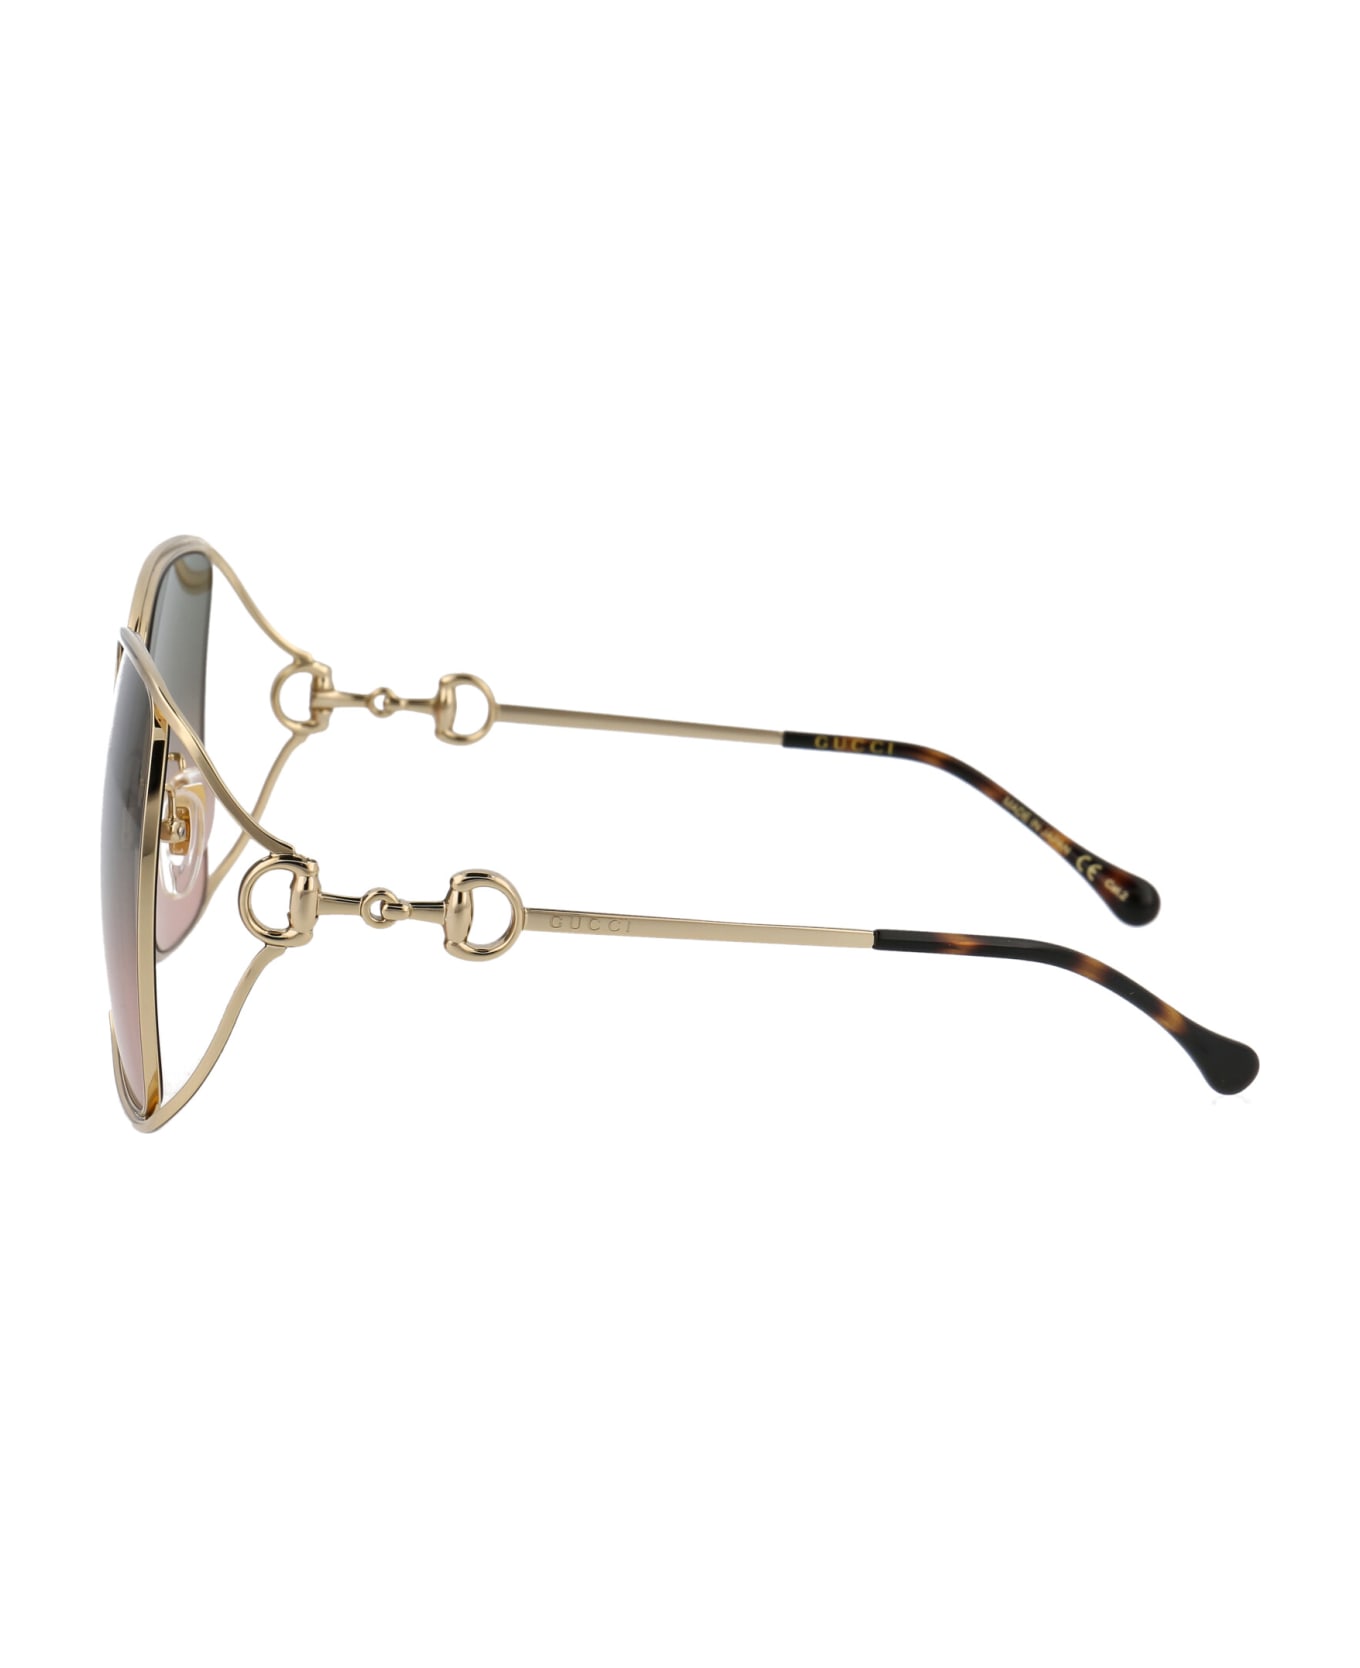 Gucci Eyewear Gg1020s Sunglasses - 001 GOLD GOLD GREEN サングラス